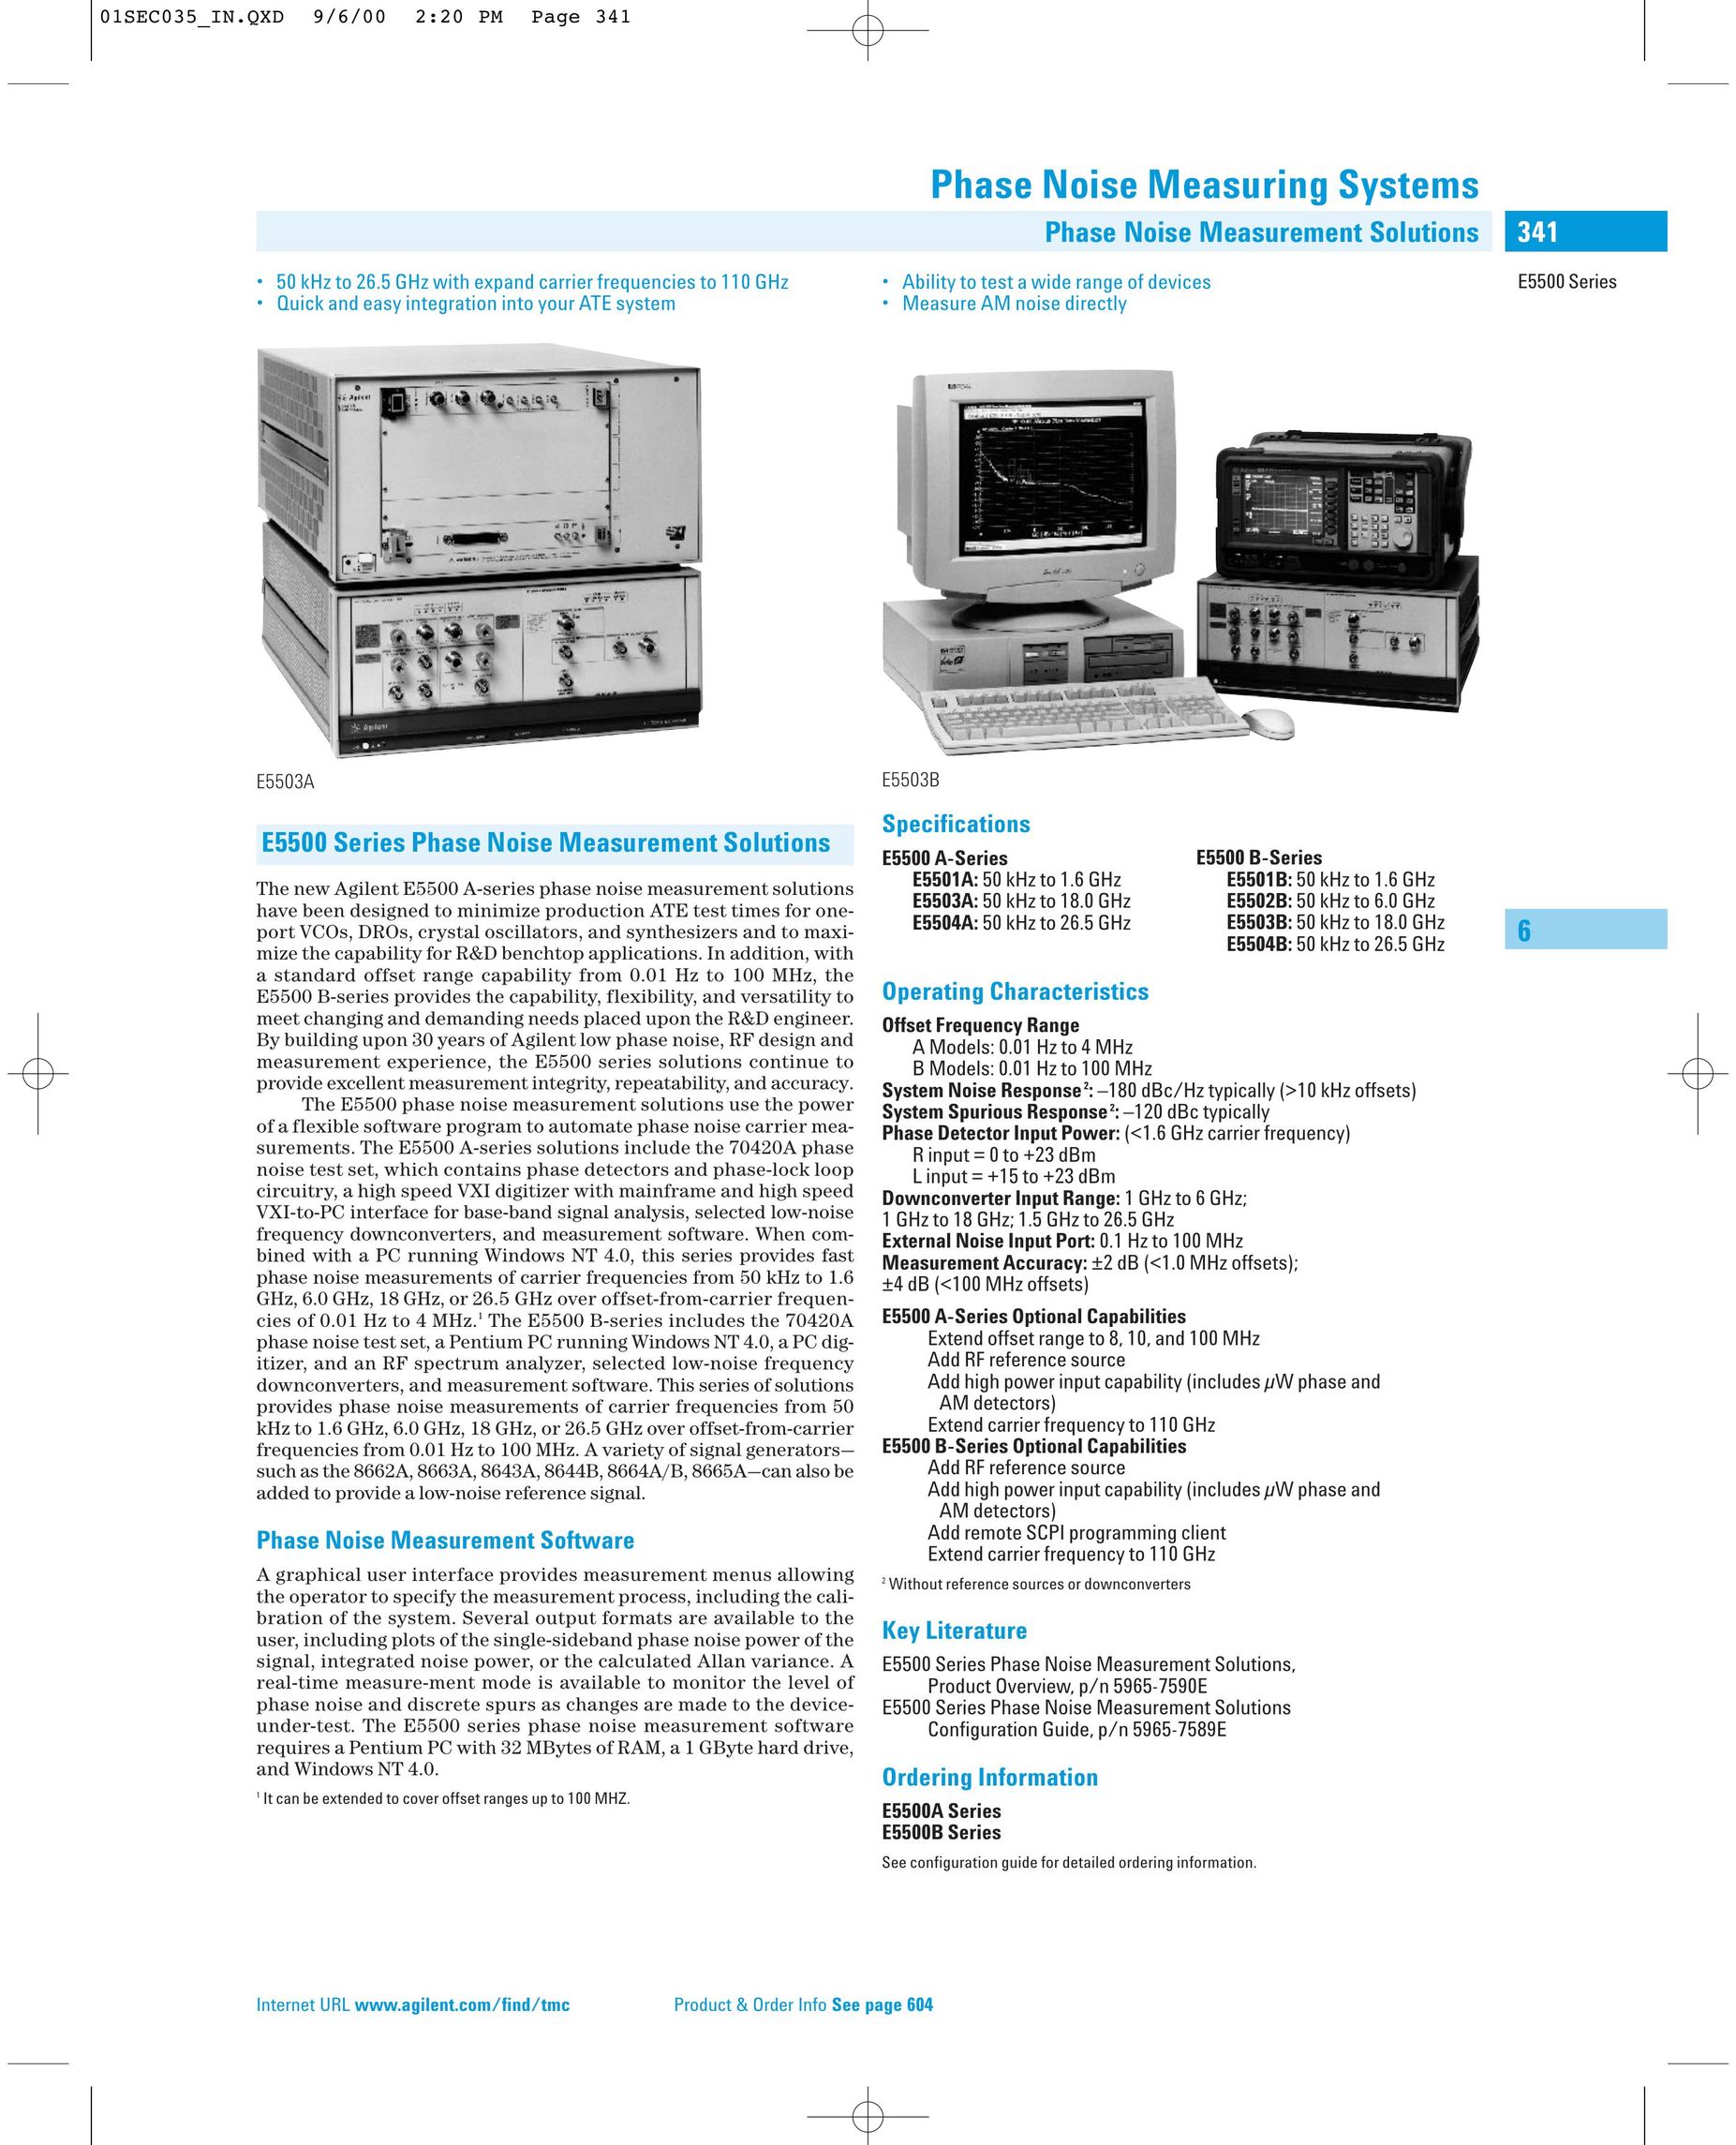 Agilent Technologies E5503A Noise Reduction Machine User Manual